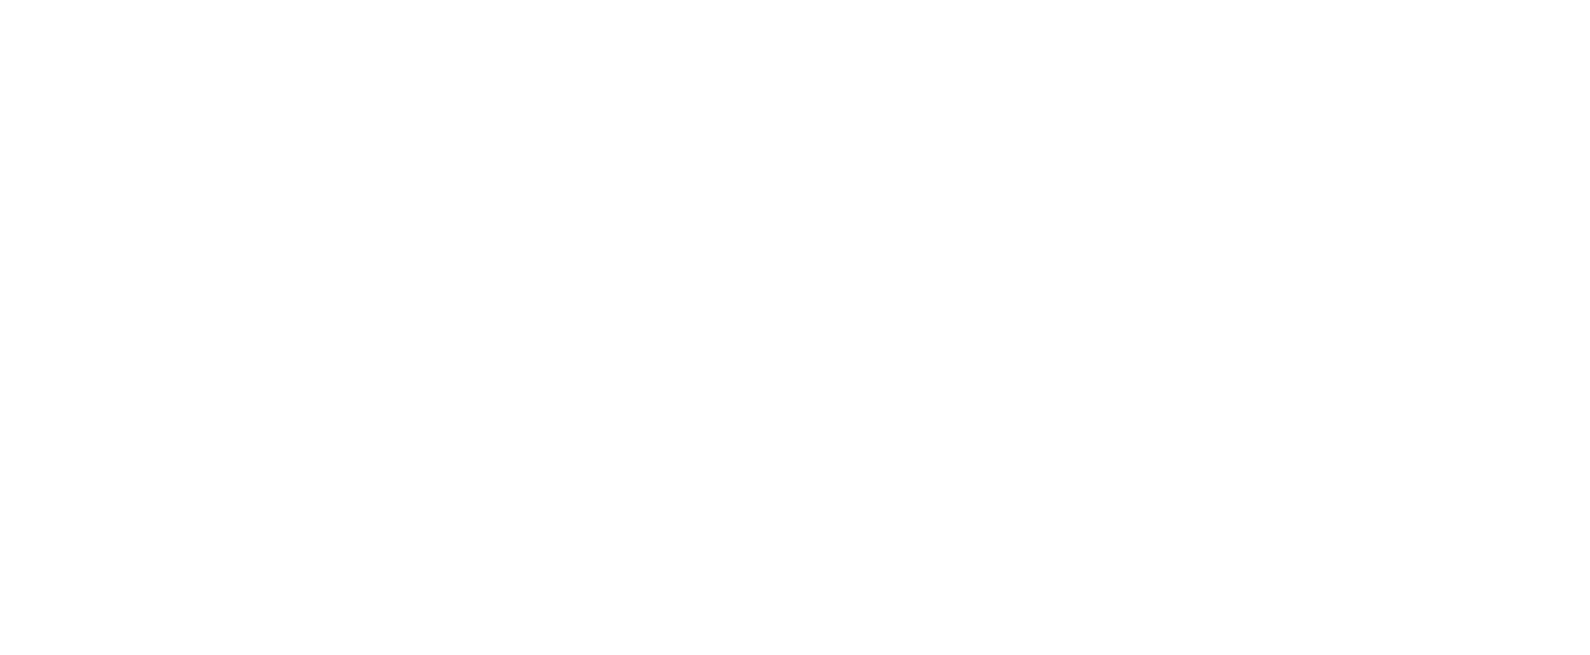 Itōchū Shōji logo for dark backgrounds (transparent PNG)